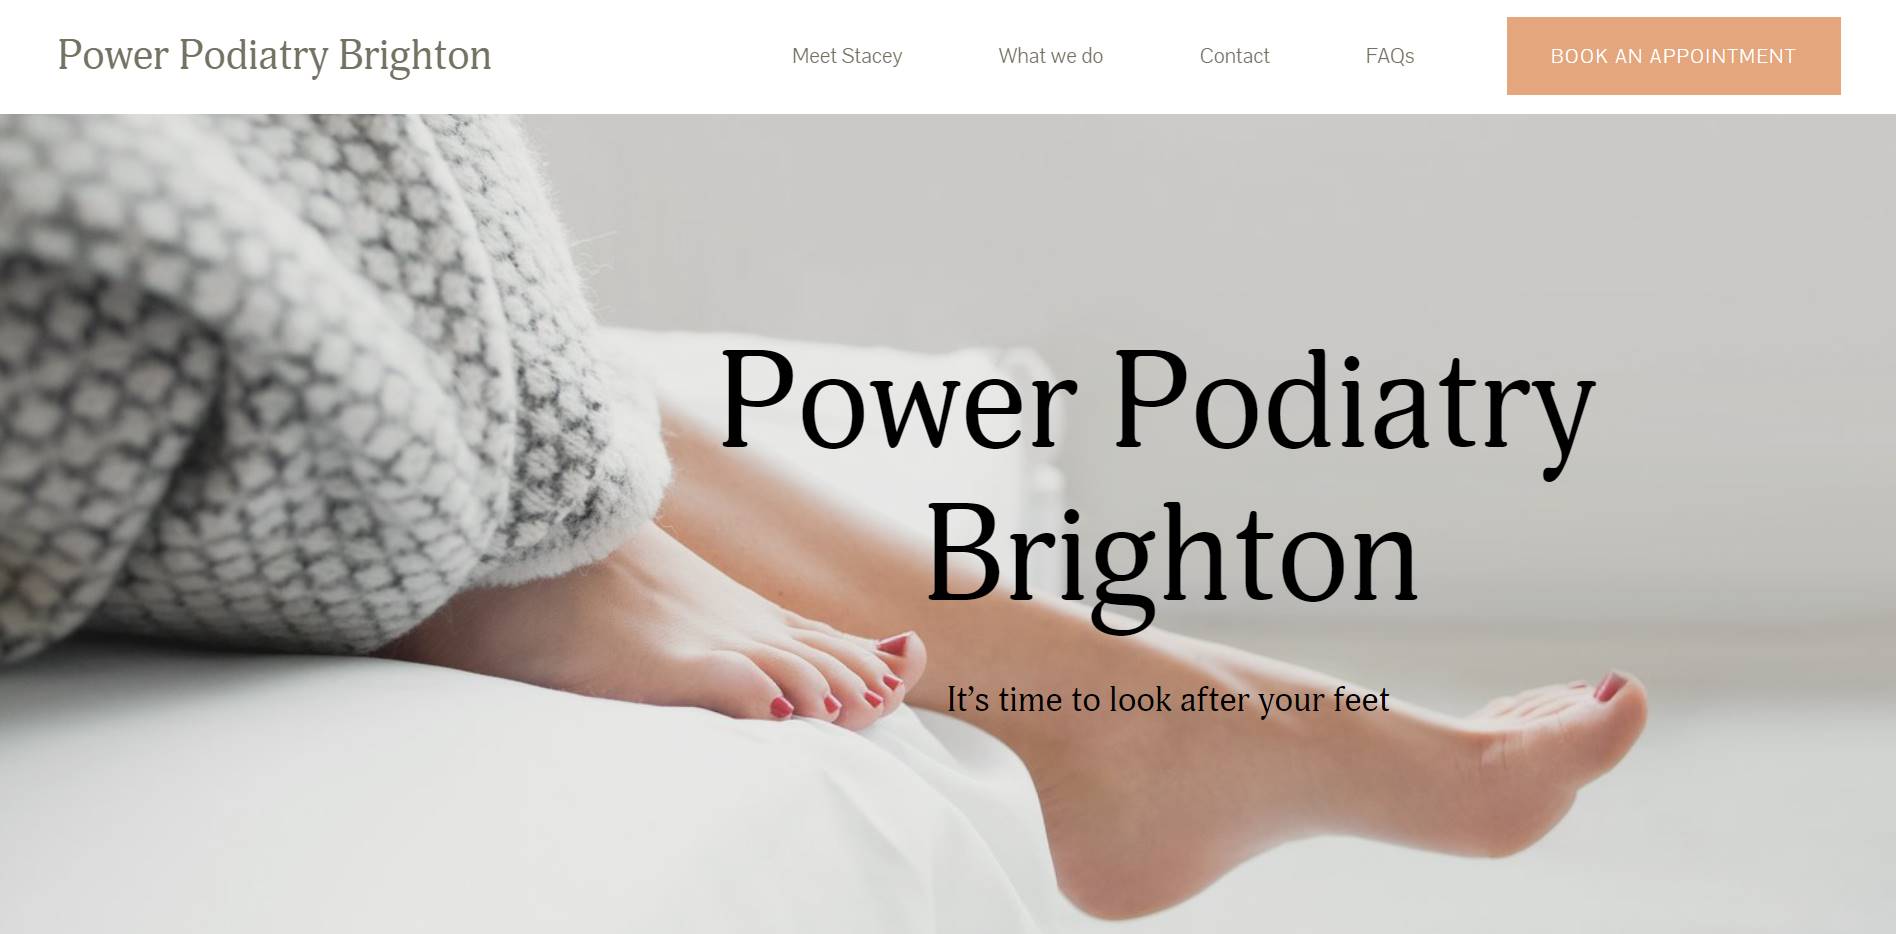 Power Podiatry Brighton